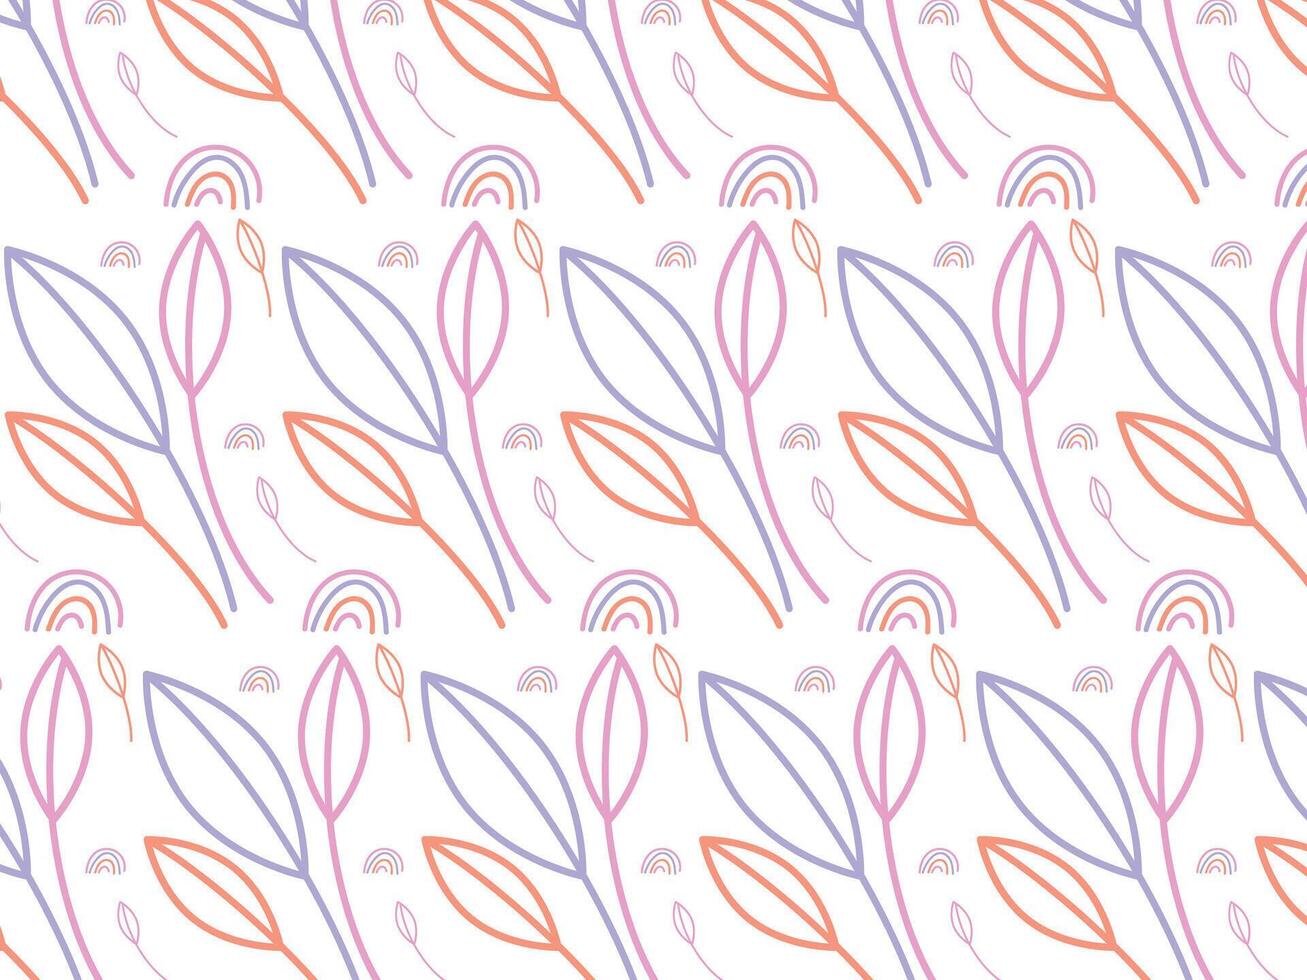 illustrationer av naturlig blad linjekonst bakgrund mönster vektor